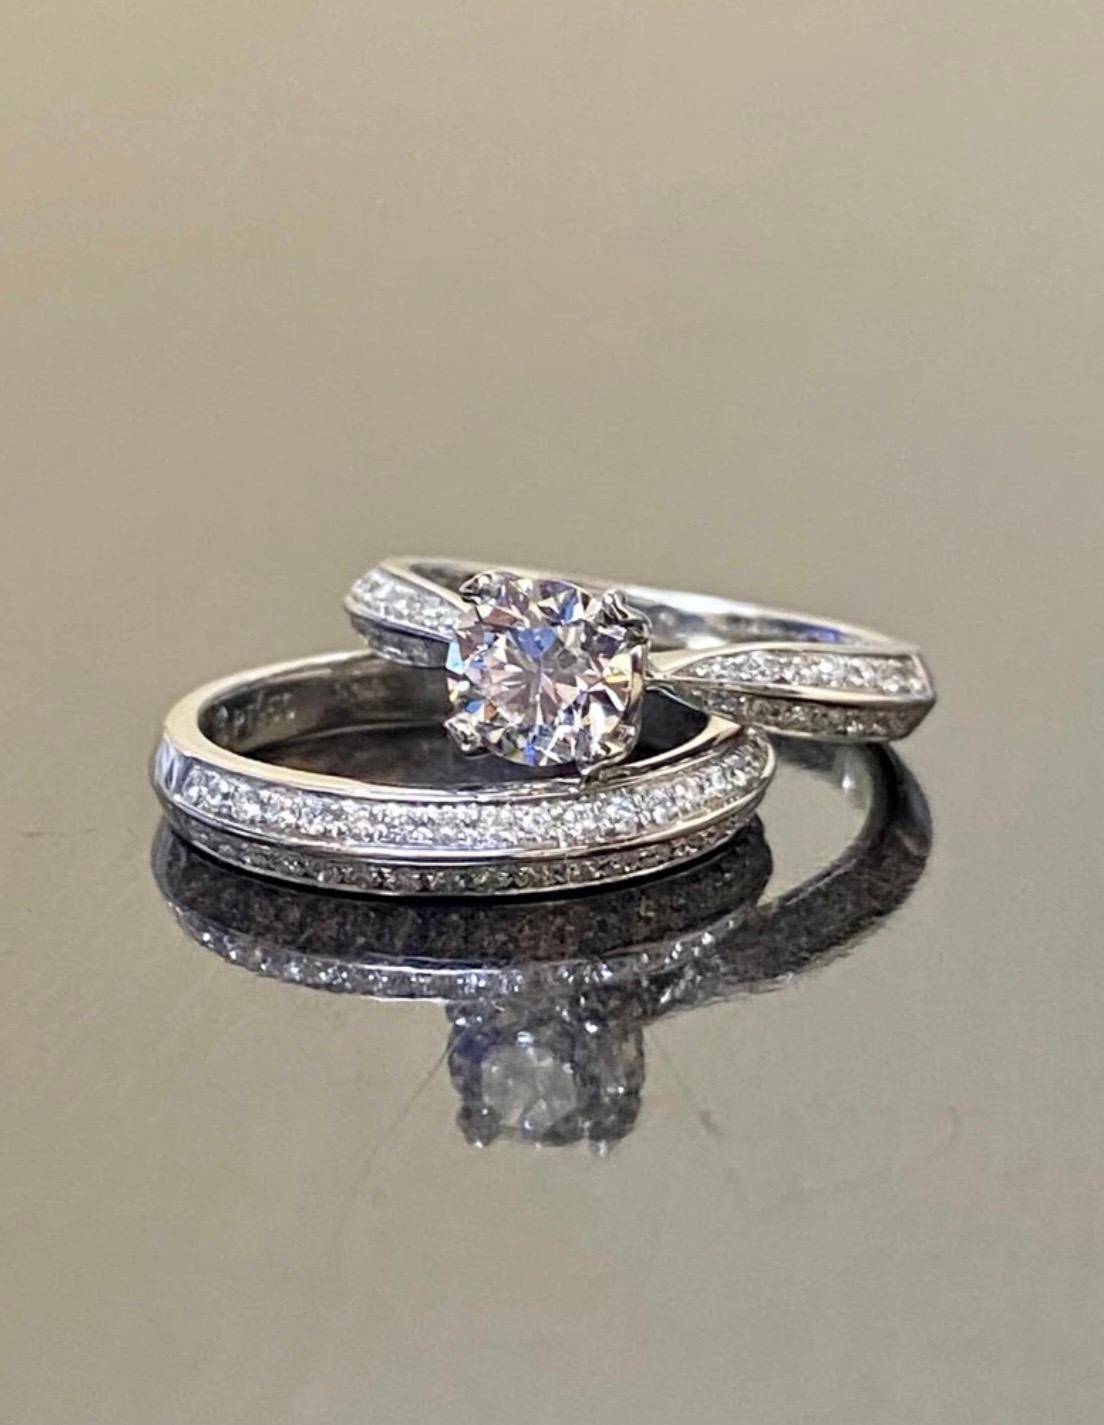 DeKara Design Collection

Handmade Platinum Diamond Pave Set Engagement Ring Bridal Set.

Metal- 95% Platinum, 5% Iridium.

Stones- GIA Certified Round Diamond E Color SI2 Clarity 0.90 Carats. 76 Round Diamonds G-H Color VS2 Clarity 0.80 Carats.